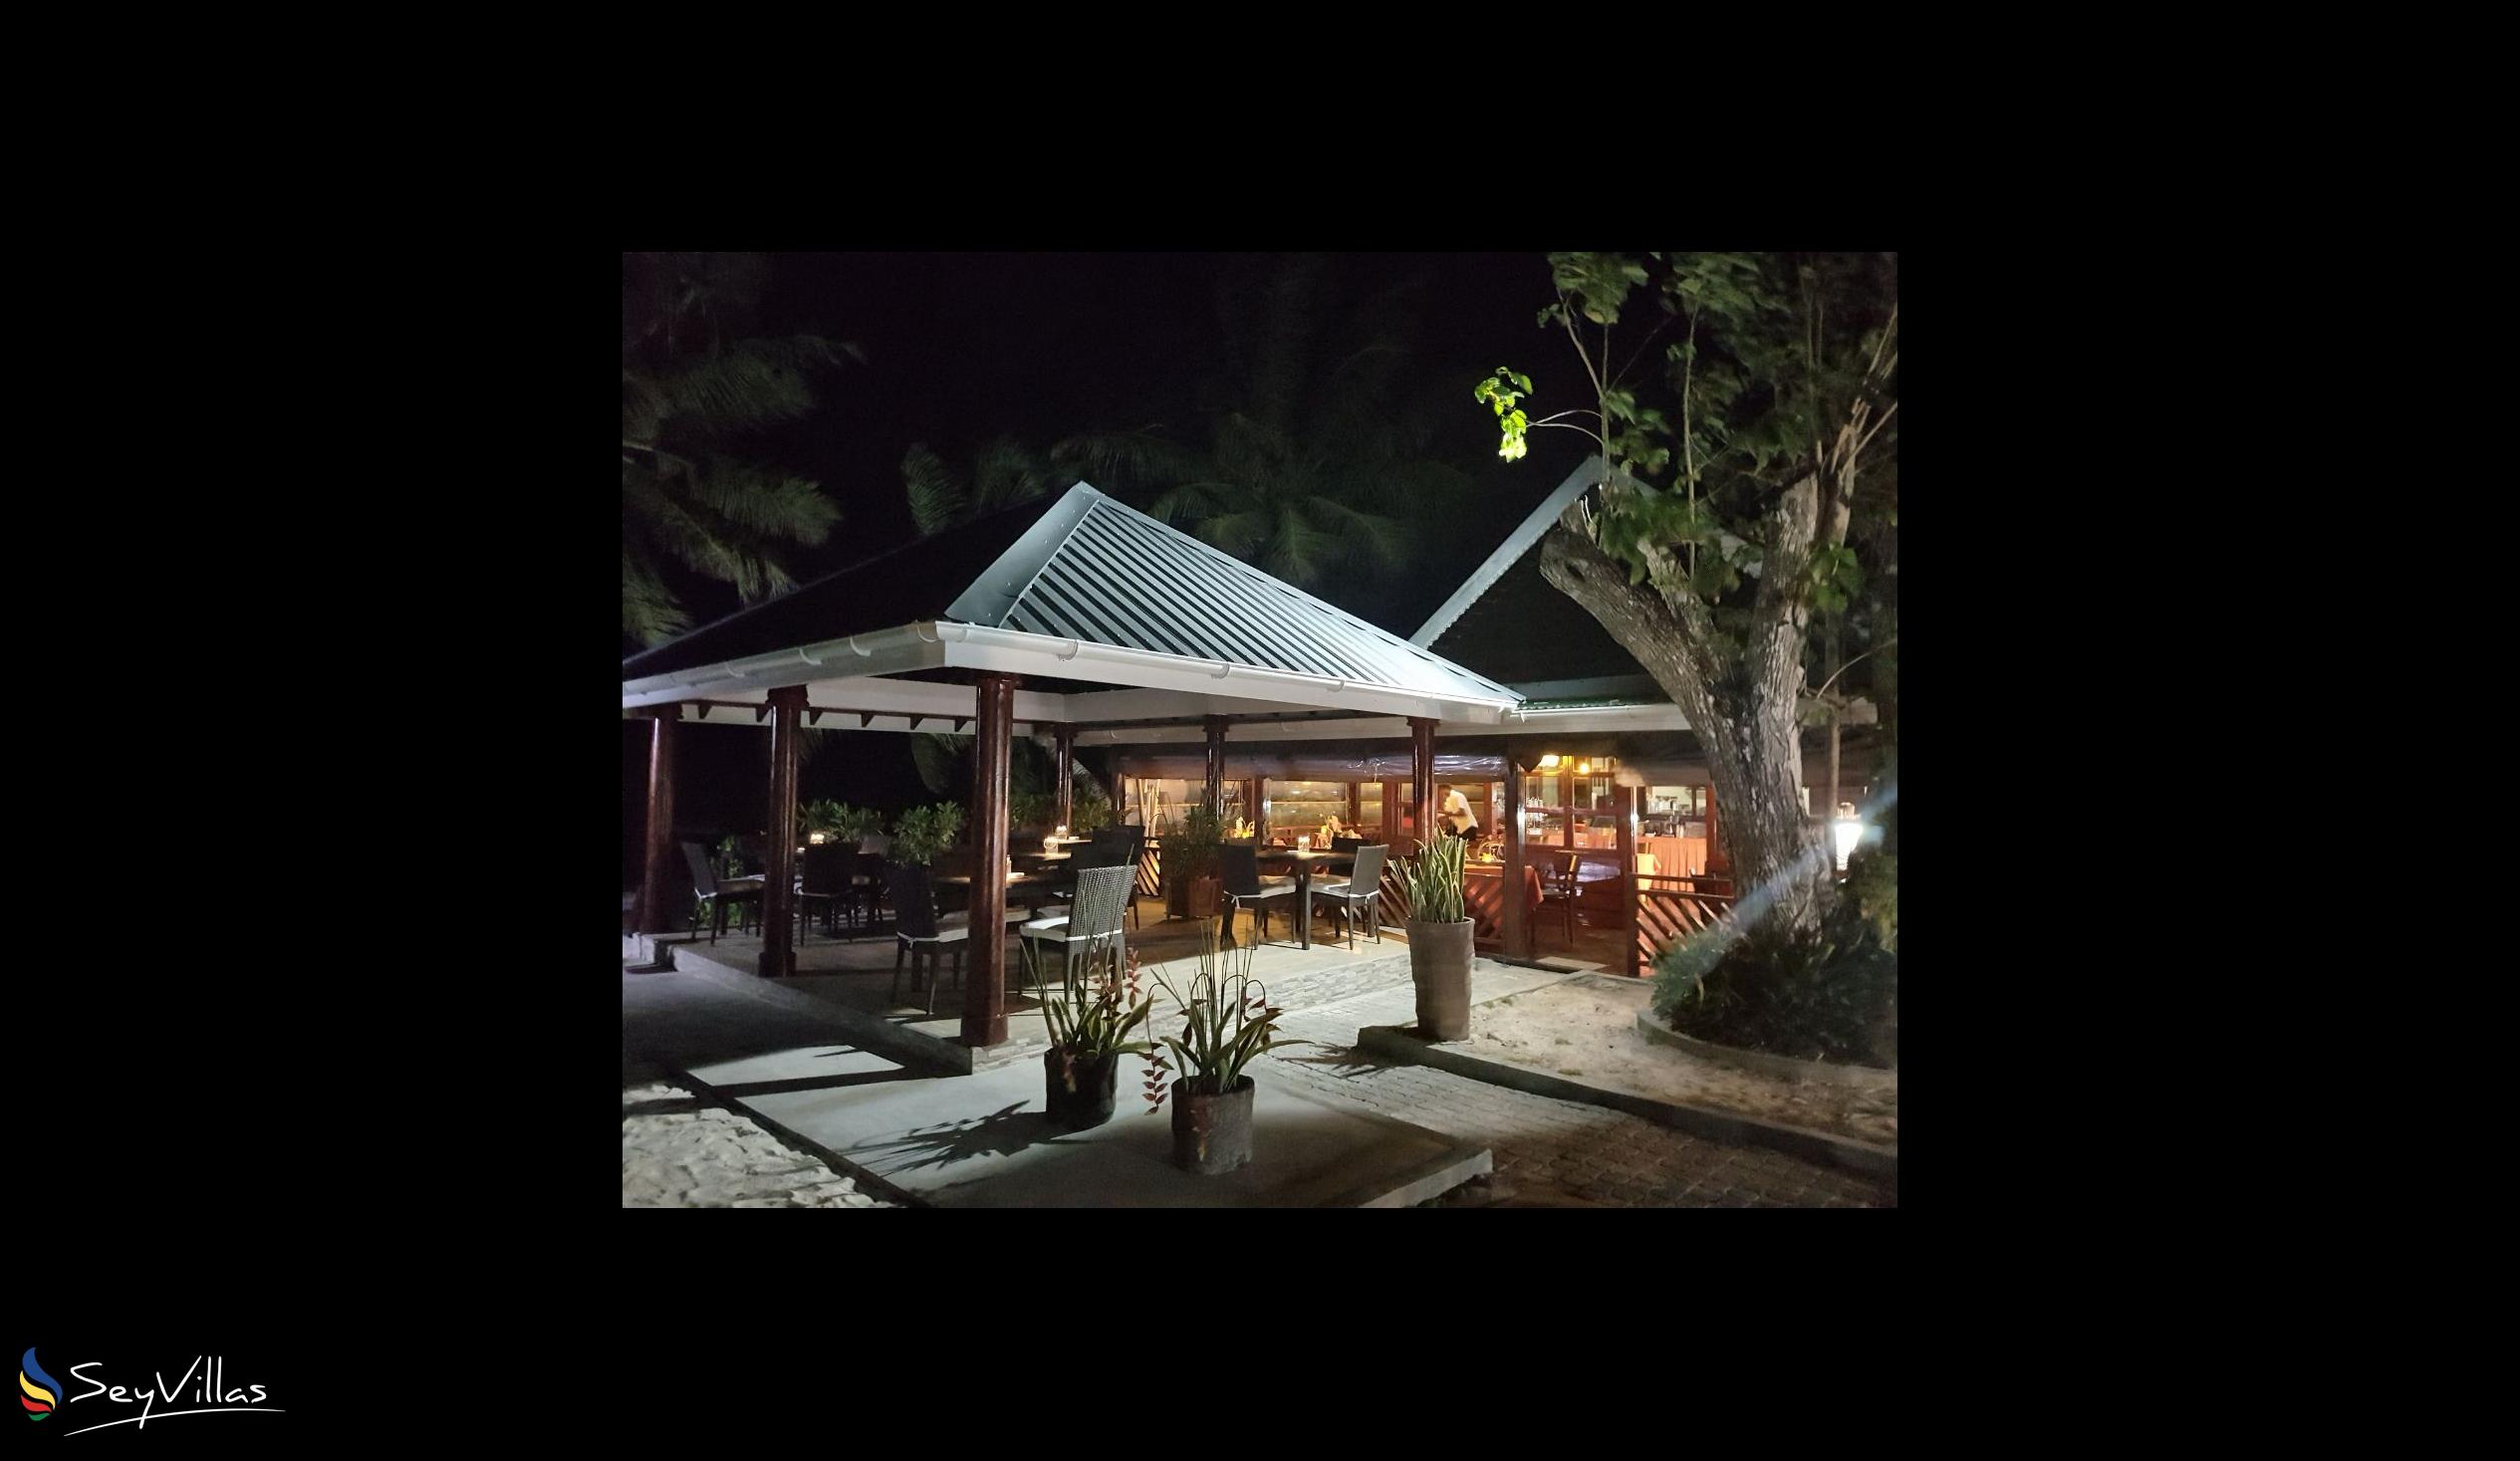 Foto 9: Villas de Mer - Aussenbereich - Praslin (Seychellen)